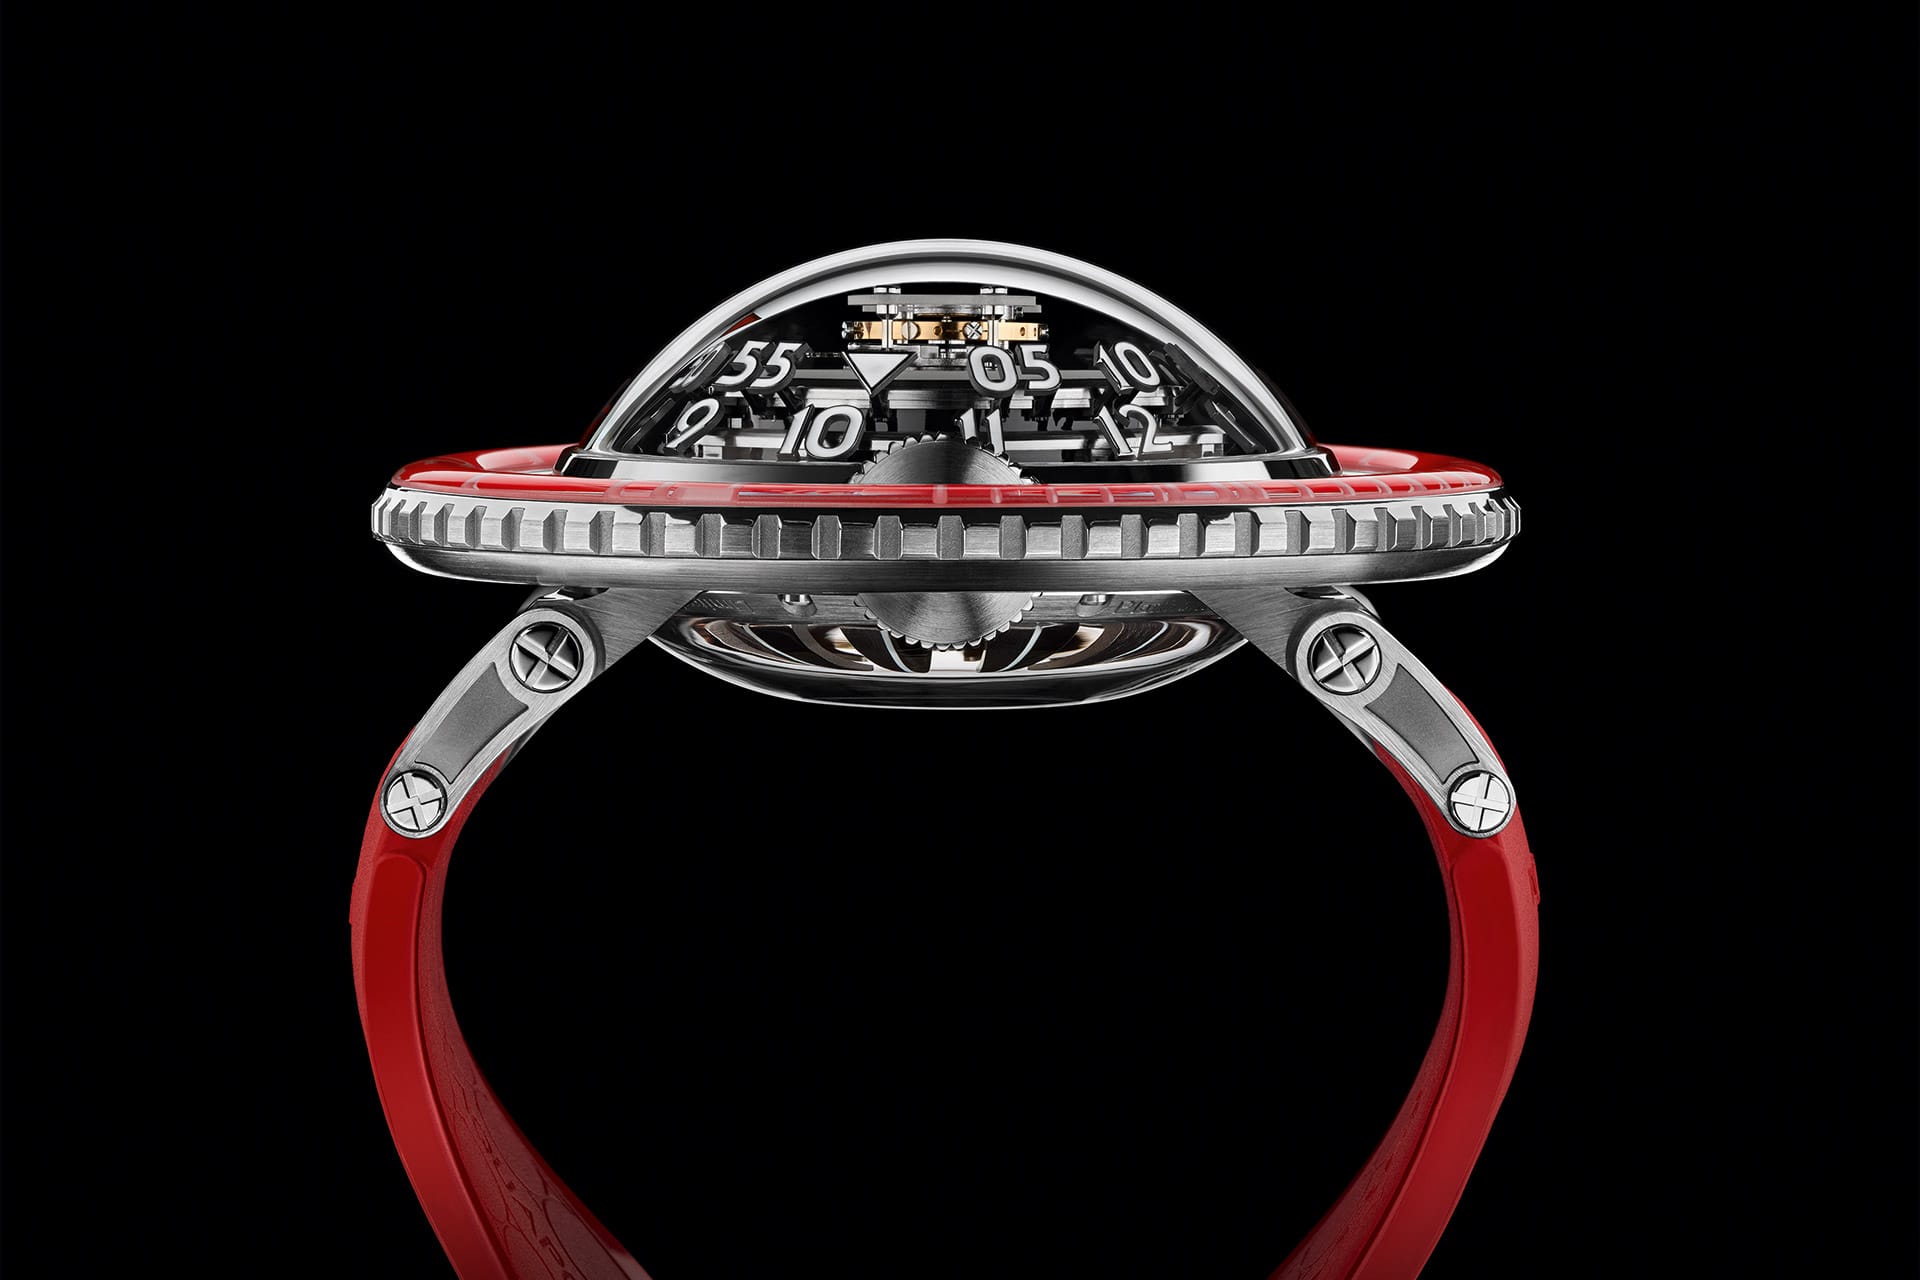 mb&f hm7 aquapod platinum red horloge Pure Luxe